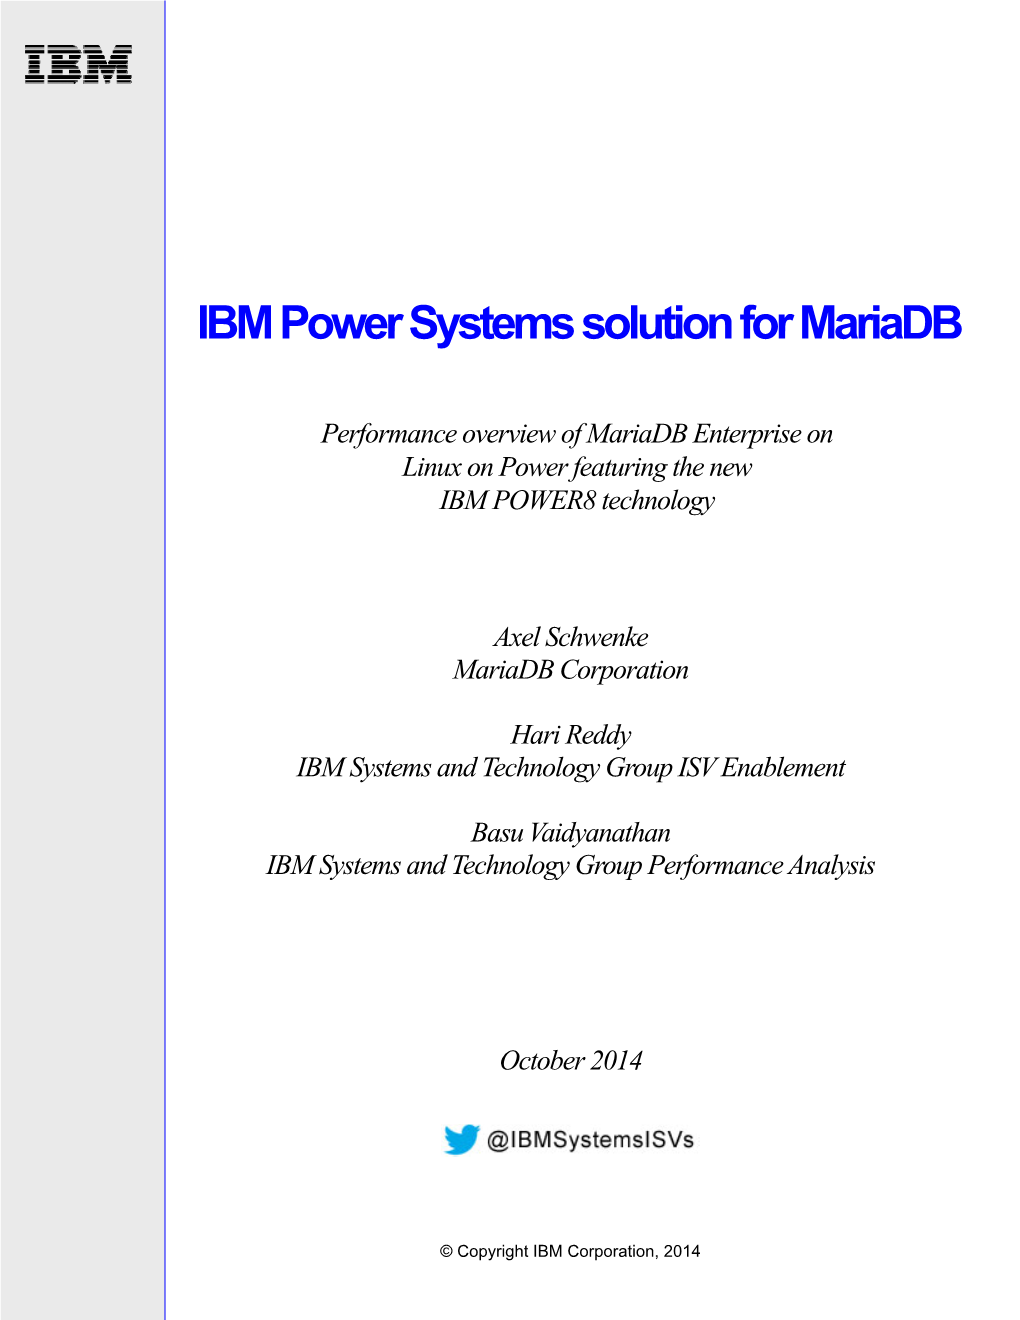 IBM Power Systems Solution for Mariadb